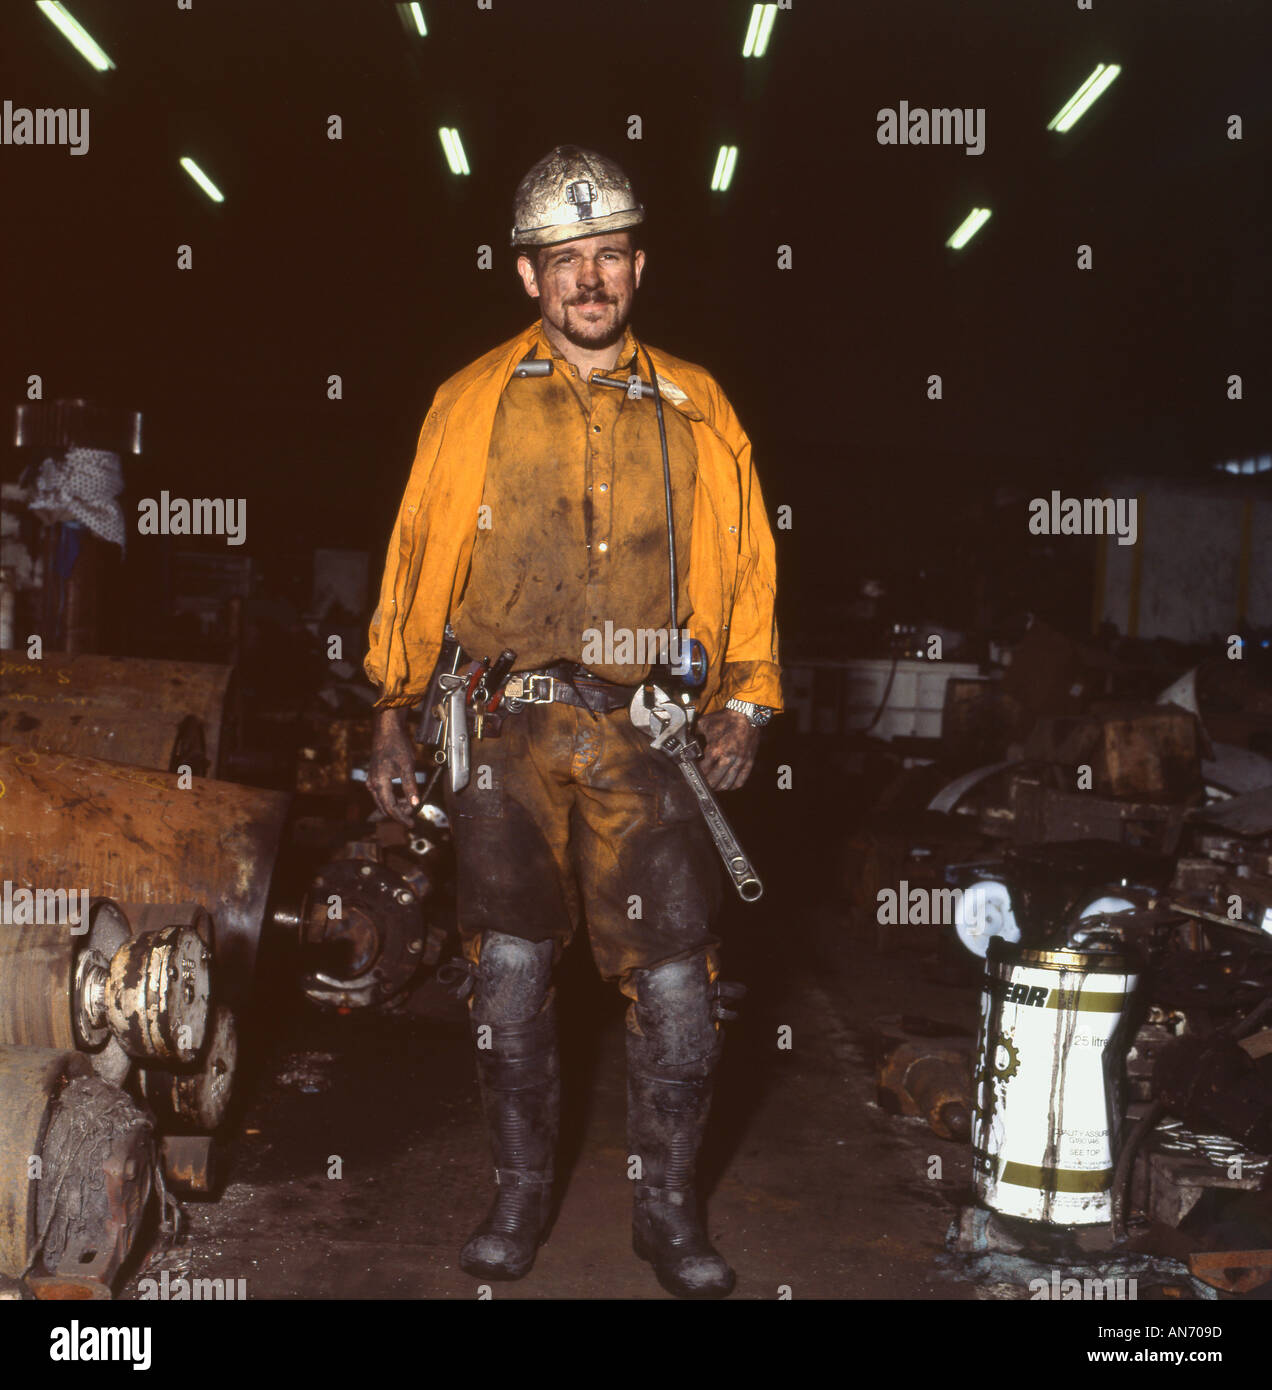 Coal Miner Costume